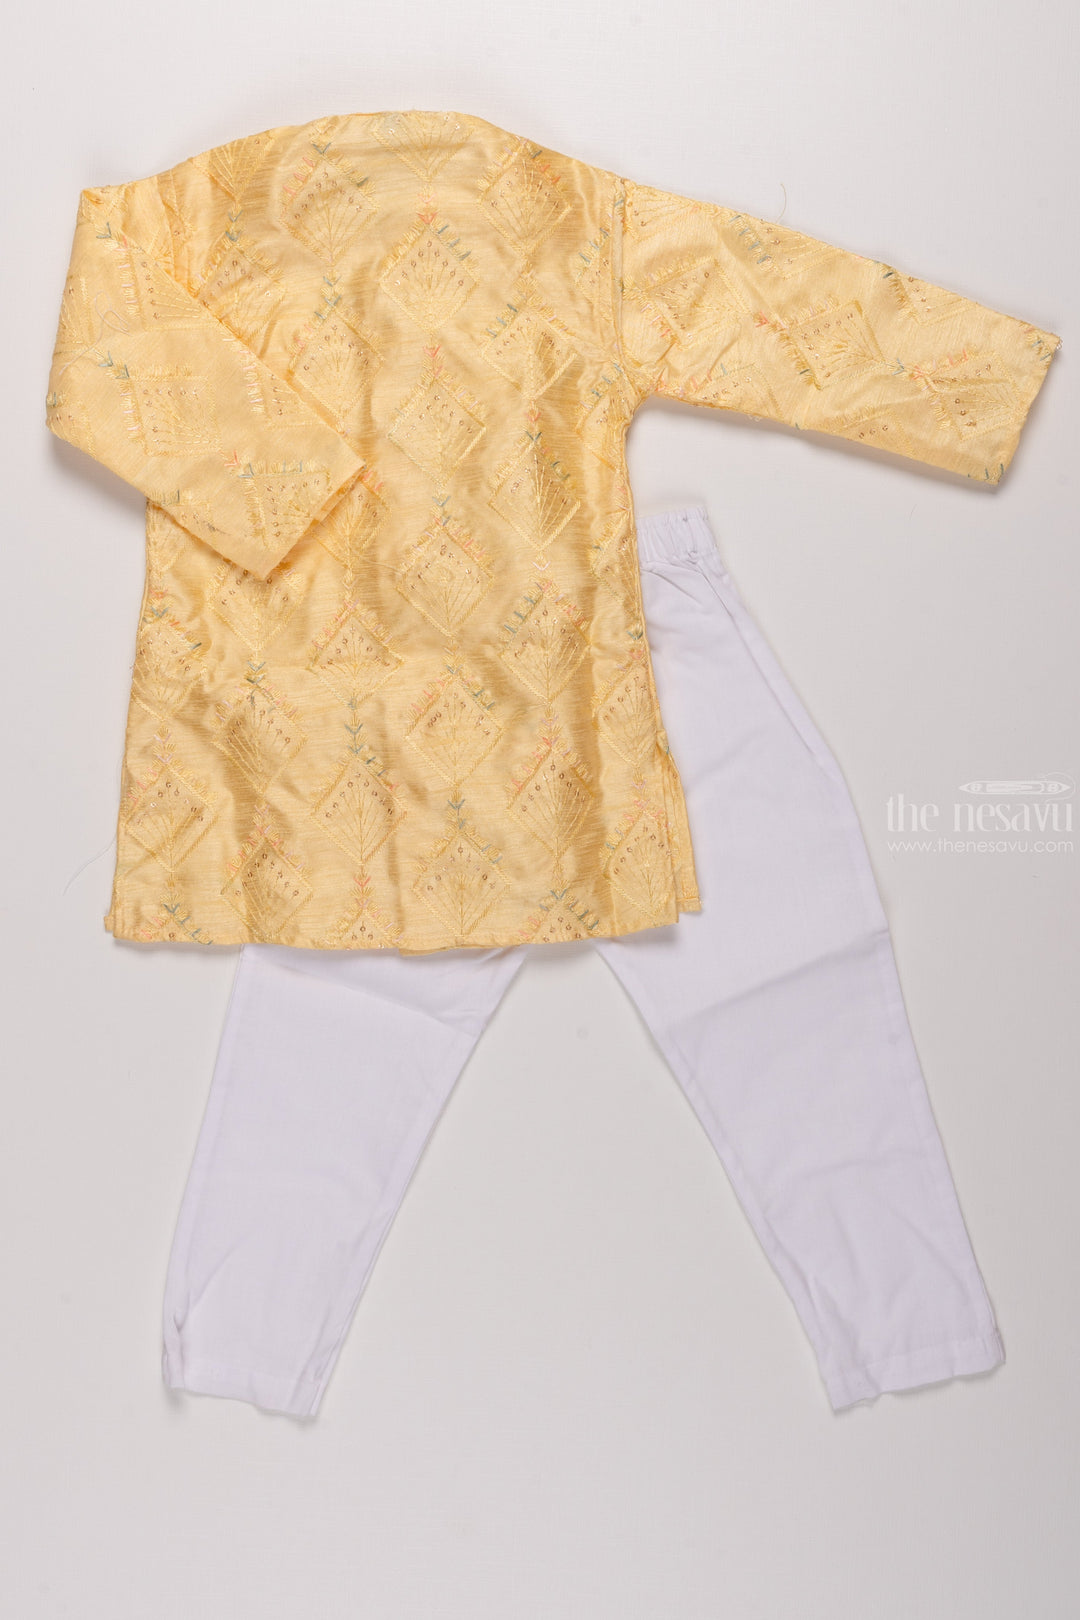 The Nesavu Boys Kurtha Set Boys Regal Yellow Kurta with Geometric Embroidery & Crisp White Pants Nesavu Boys Embroidered Yellow Kurtha with White Pants | Traditional Elegance Collection | The Nesavu